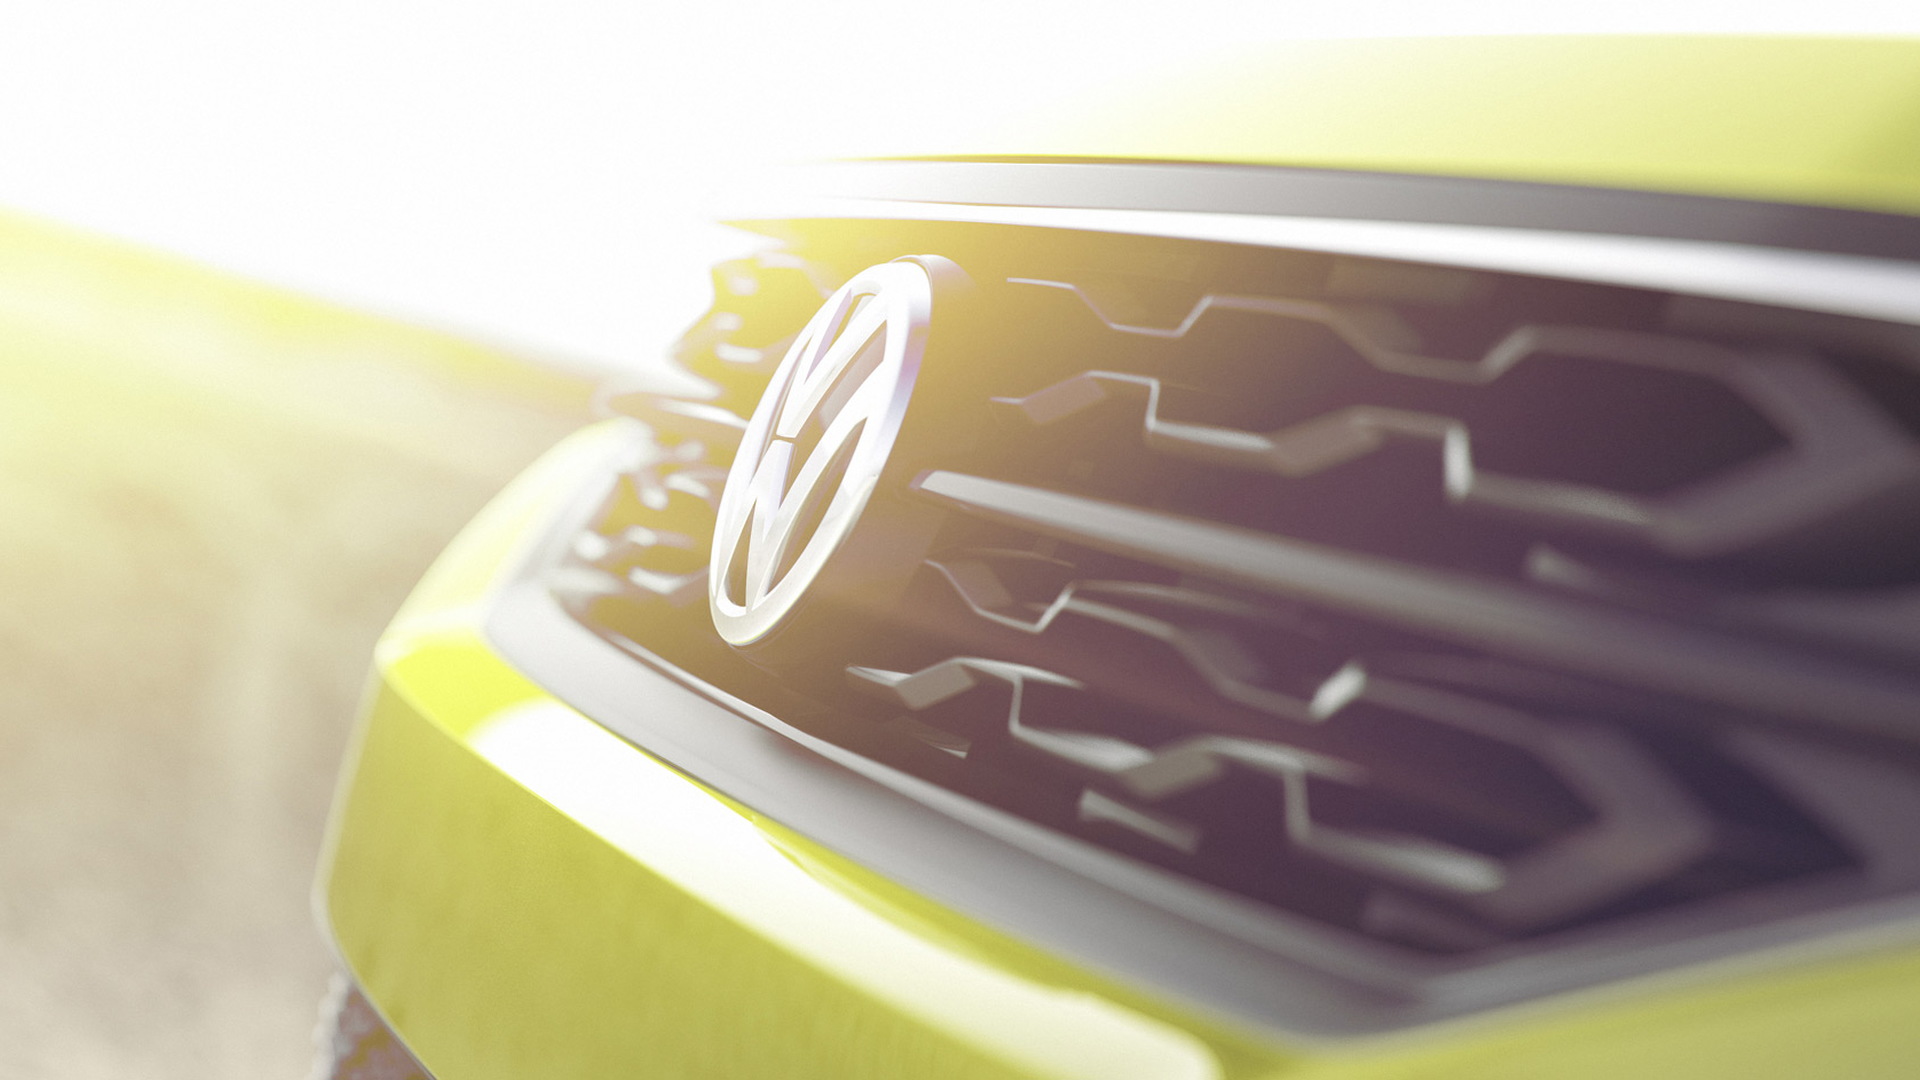 Teaser for Volkswagen crossover concept debuting at 2016 Geneva Motor Show